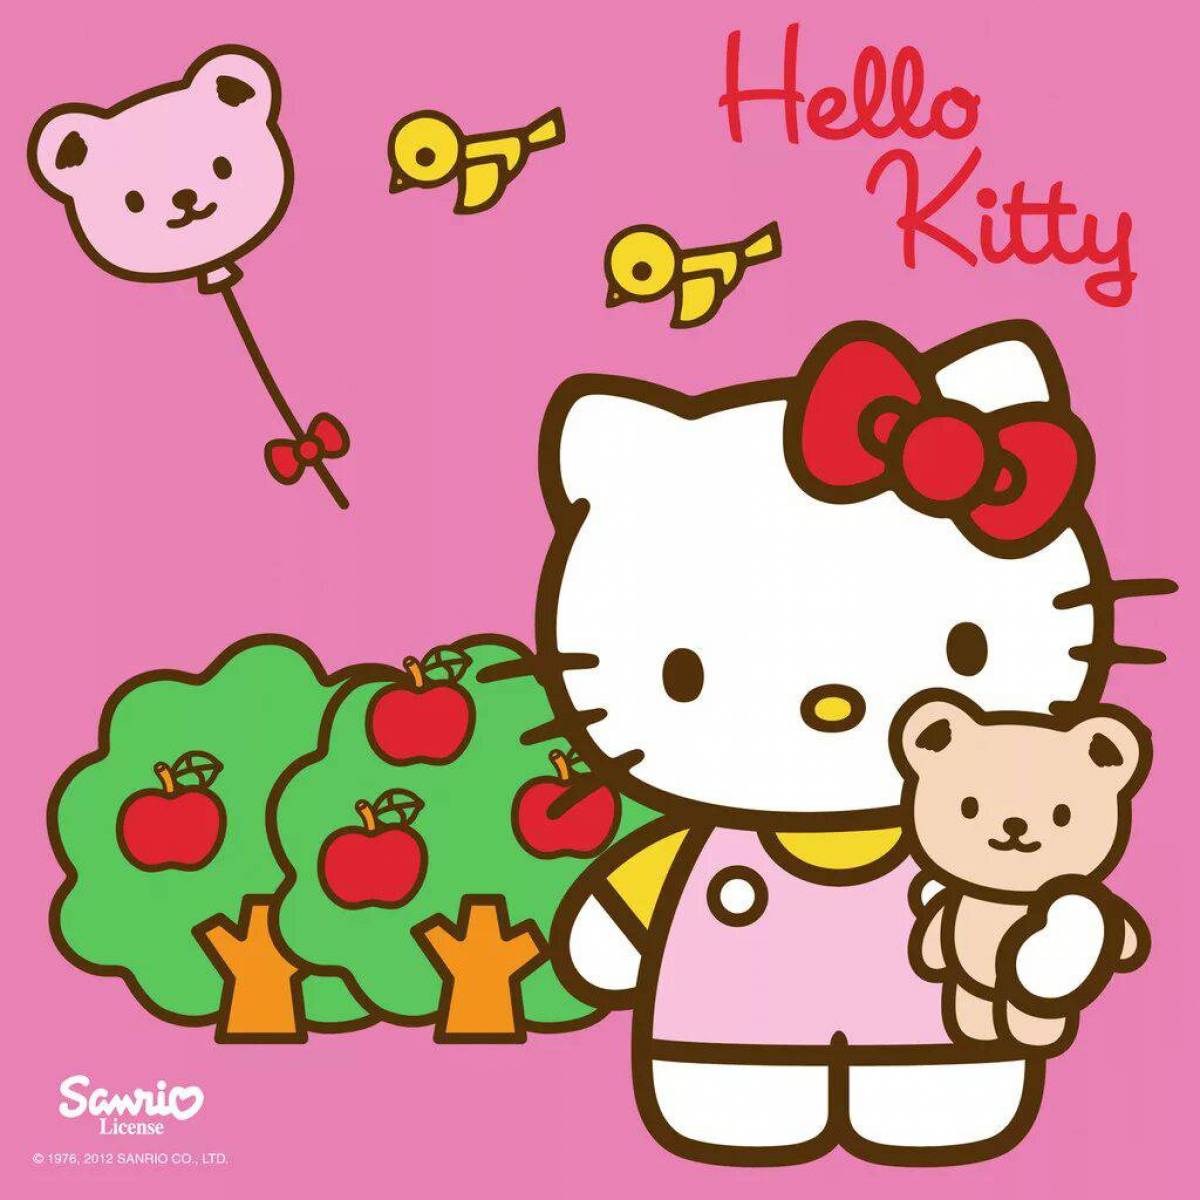 Hello kitty имя. Hello Kitty Sanrio одежда. Друзья Хелло Китти. Хелло Китти картинки. Семья hello Kitty.